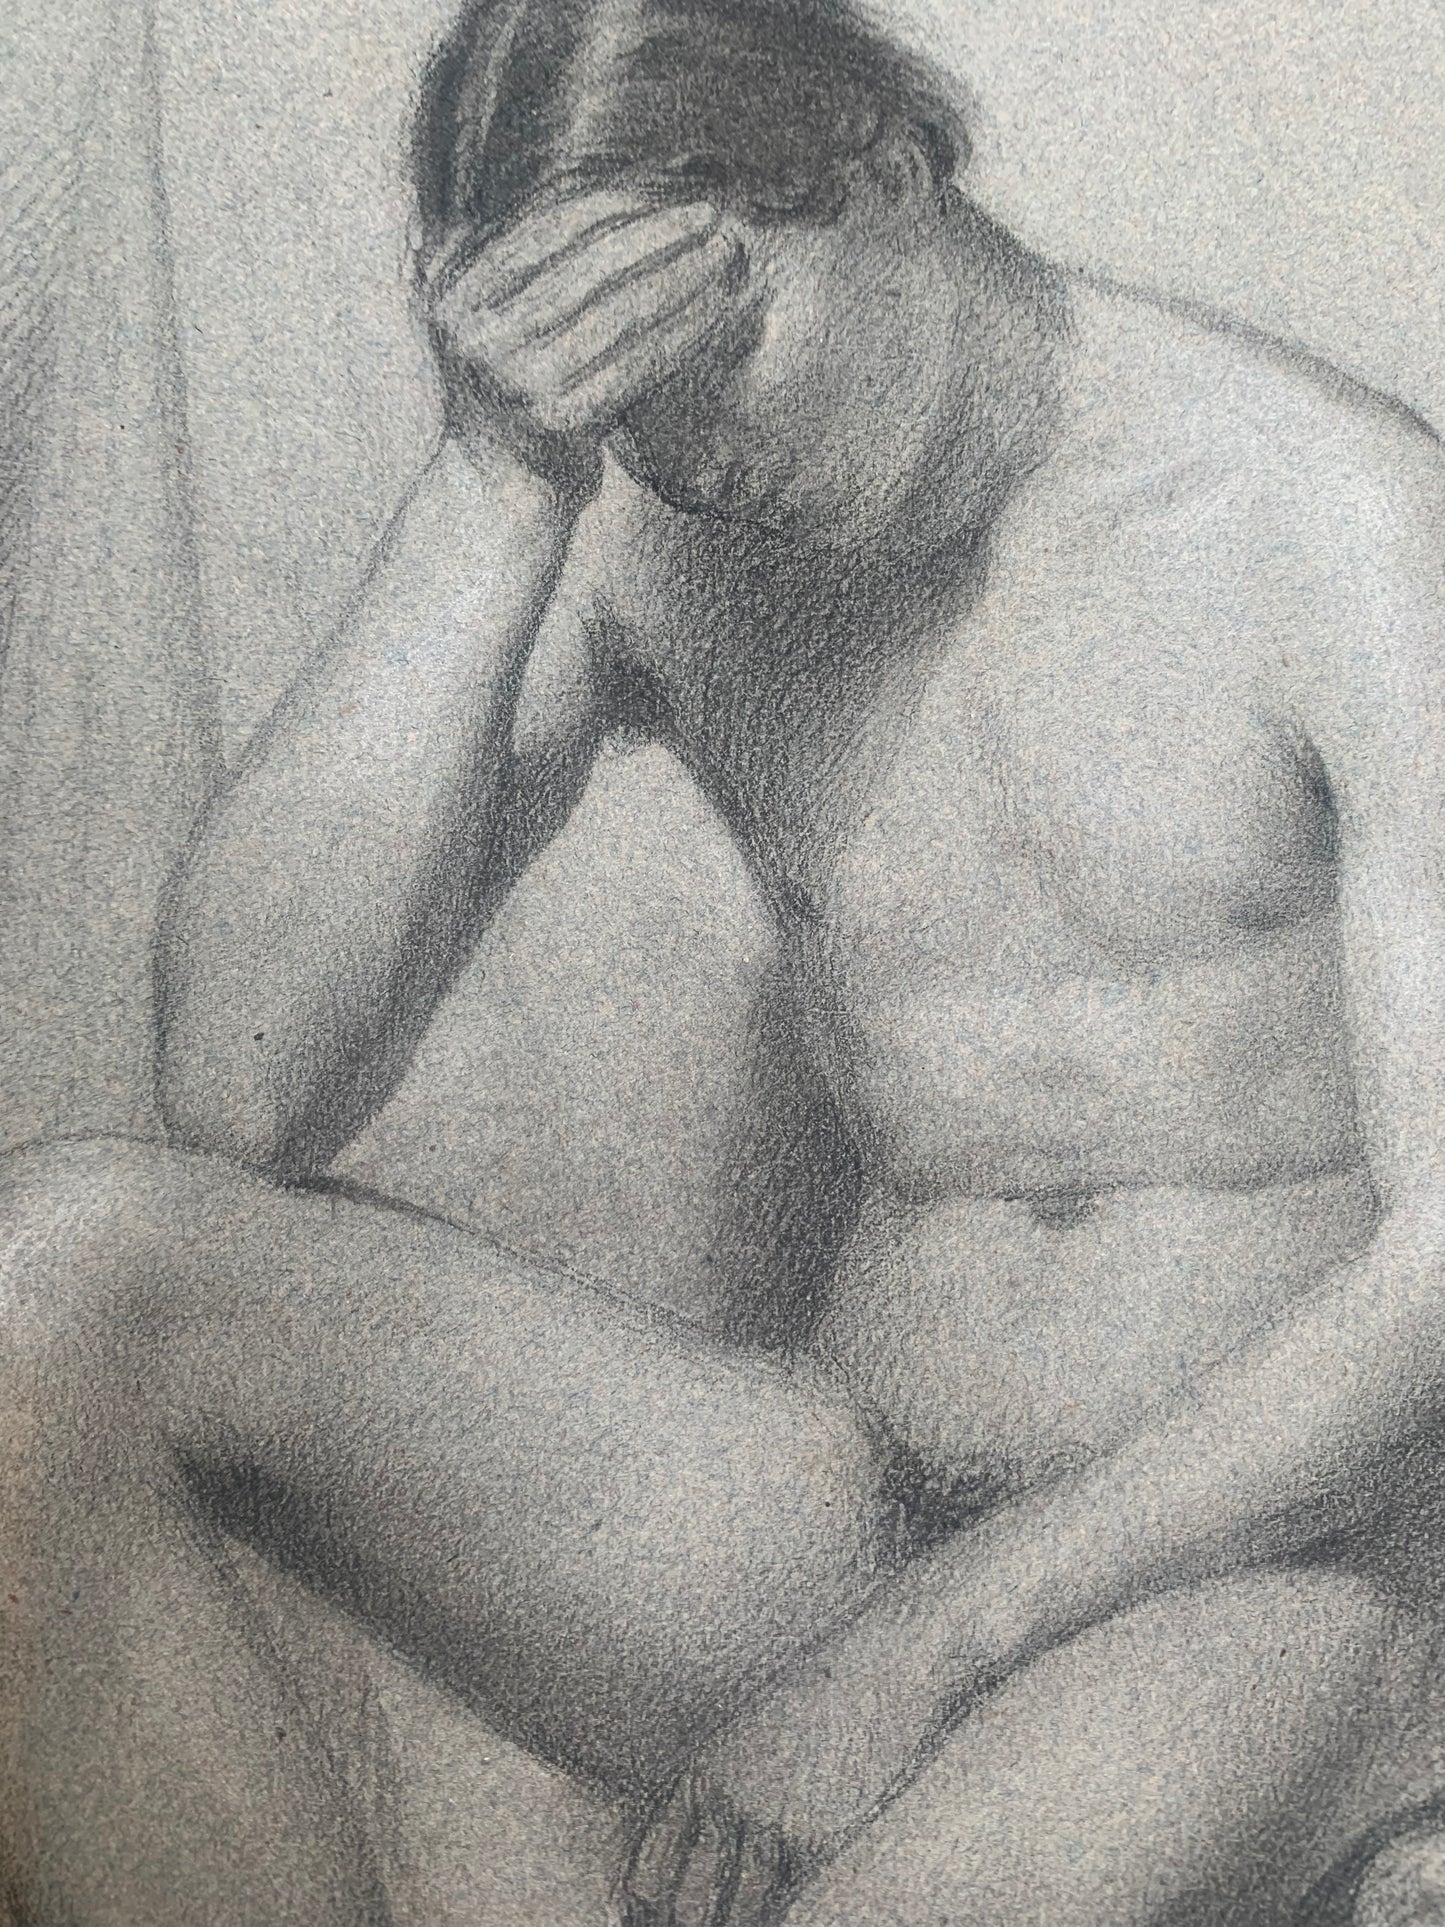 Academic Study Of Male Nude. Second Half Of XIX Century